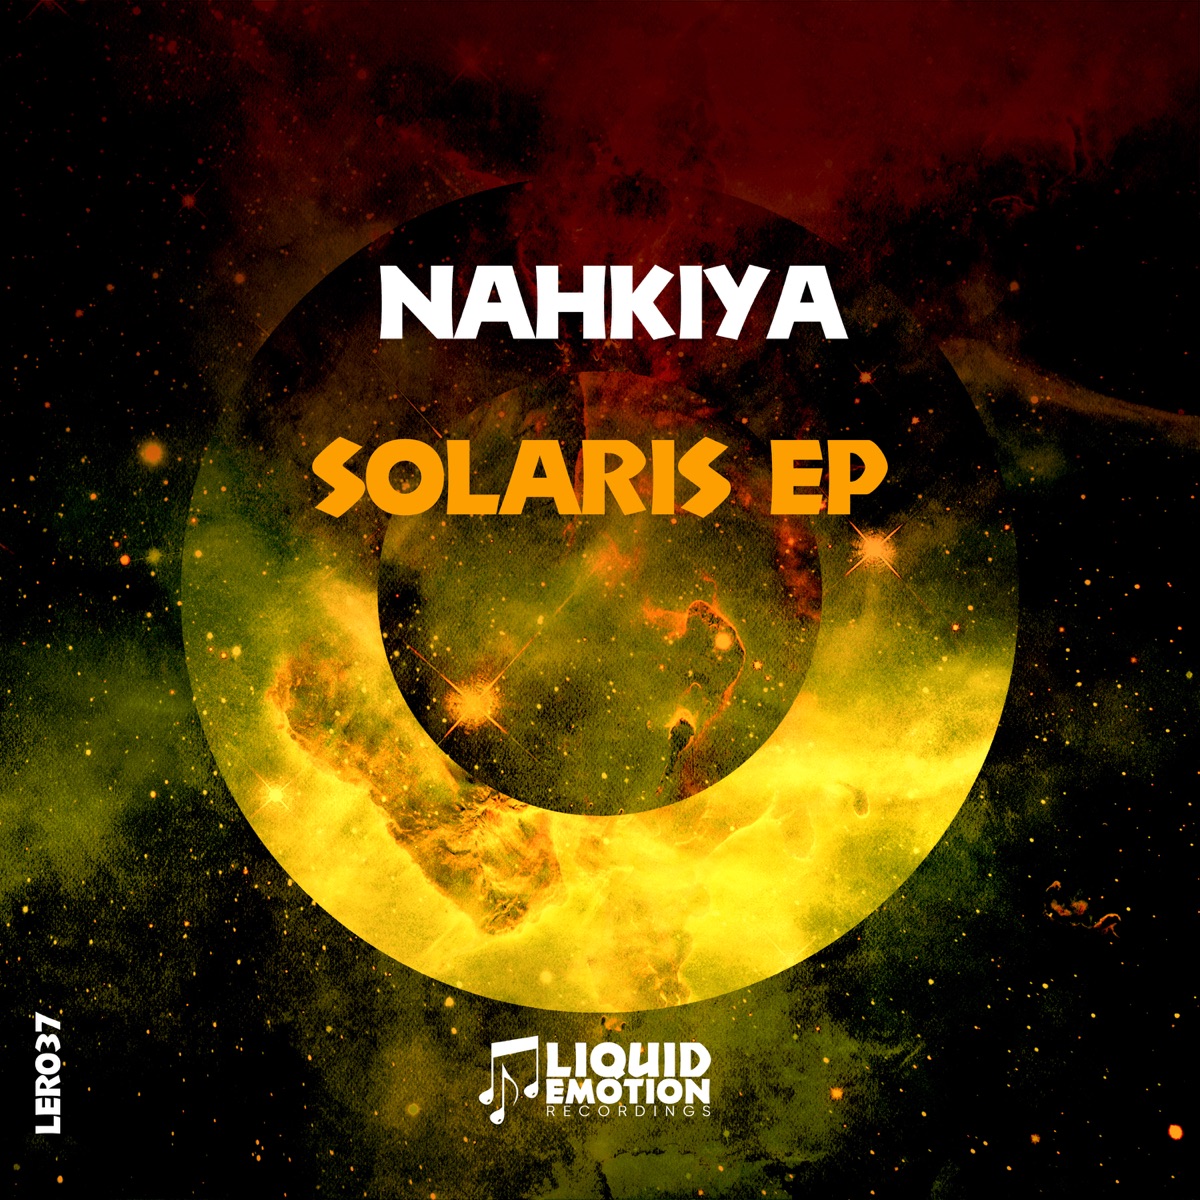 Nehida - Single by Nakhiya on Apple Music